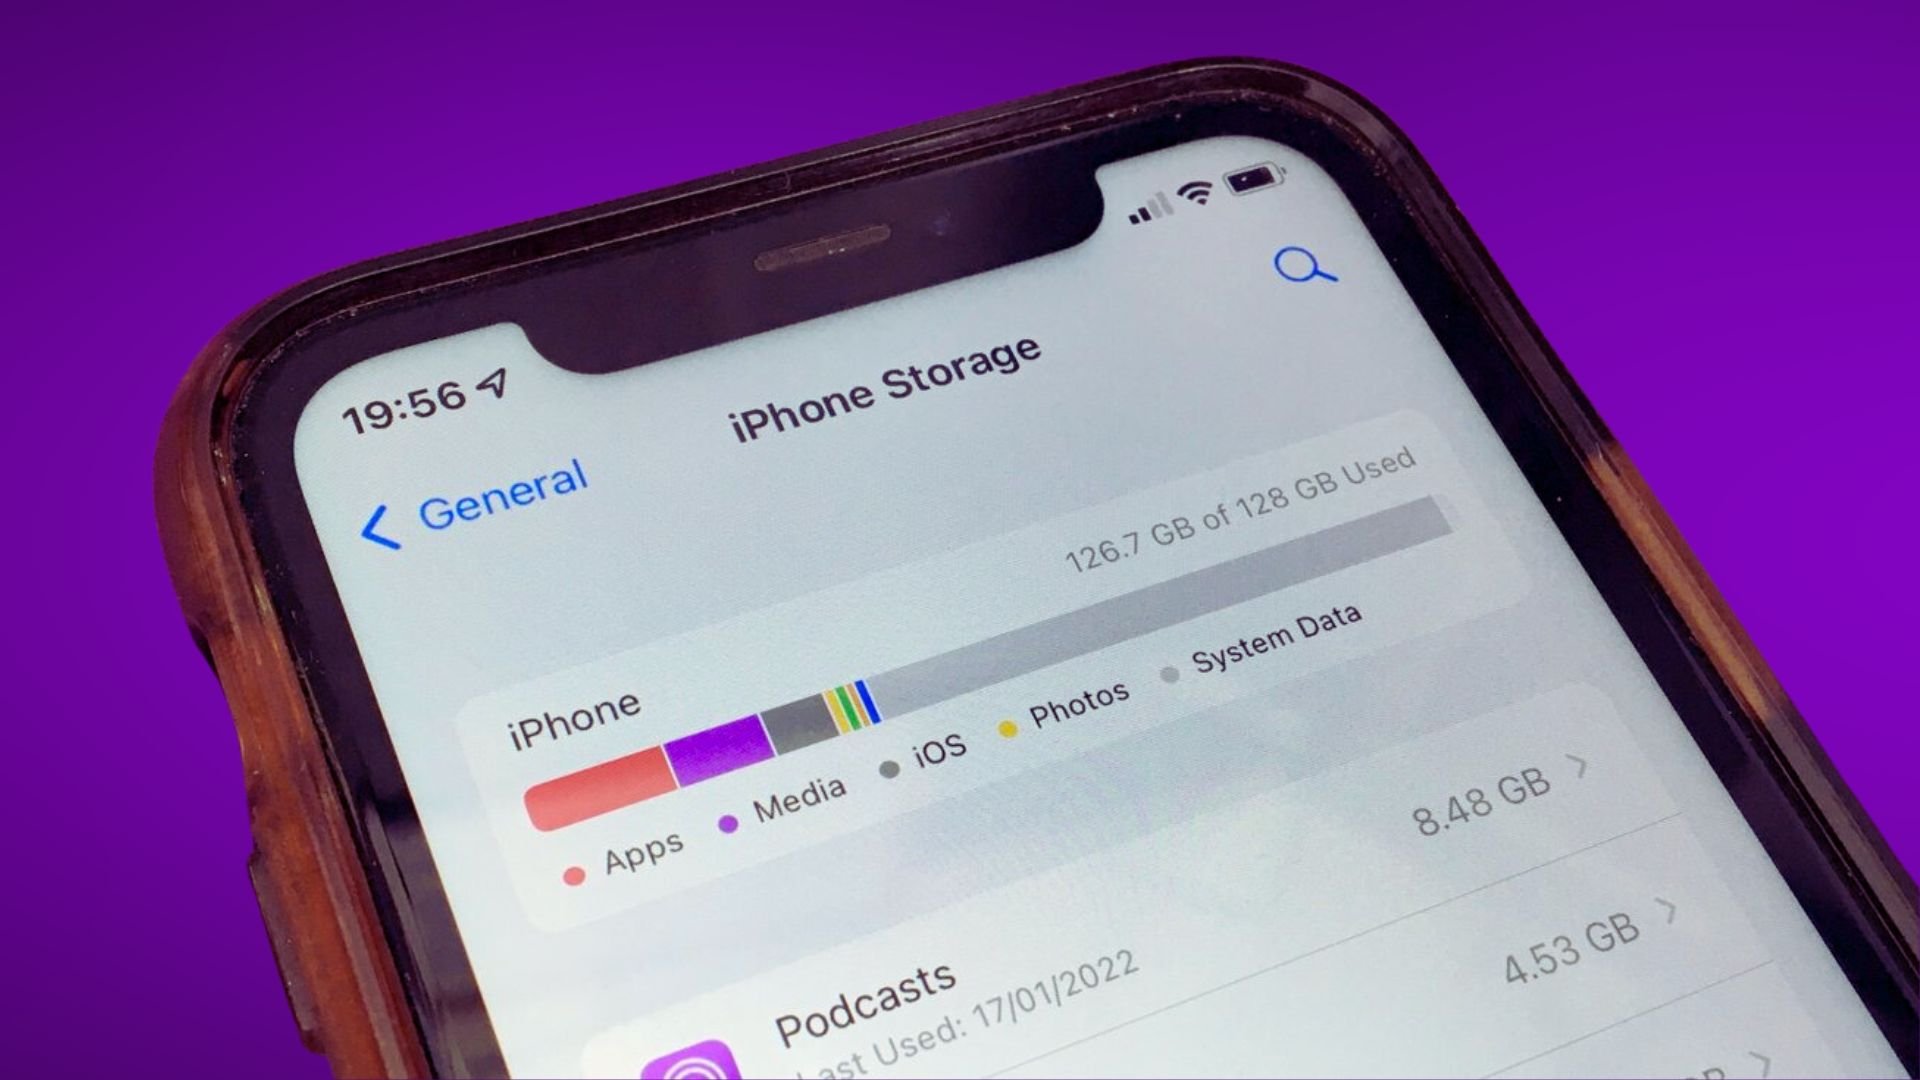 Check iPhone Storage Usage